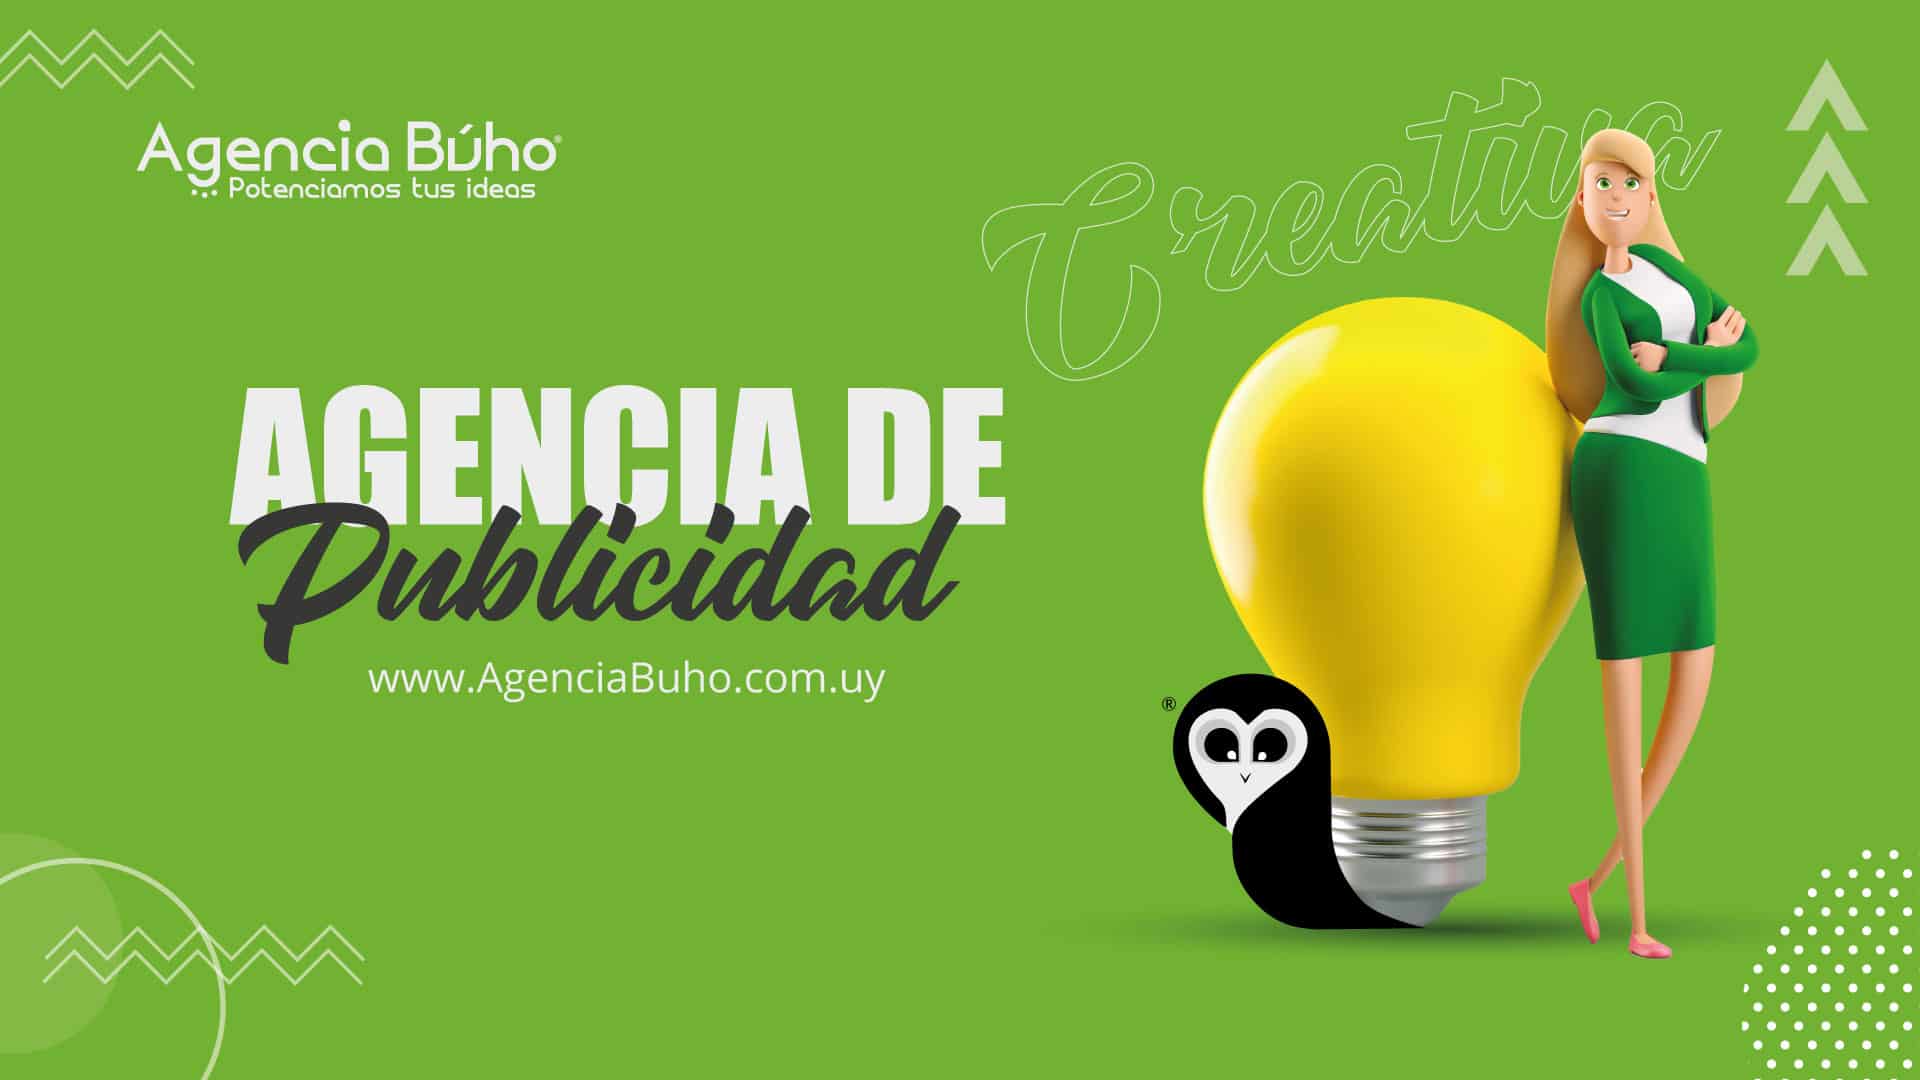 Agencia Buho